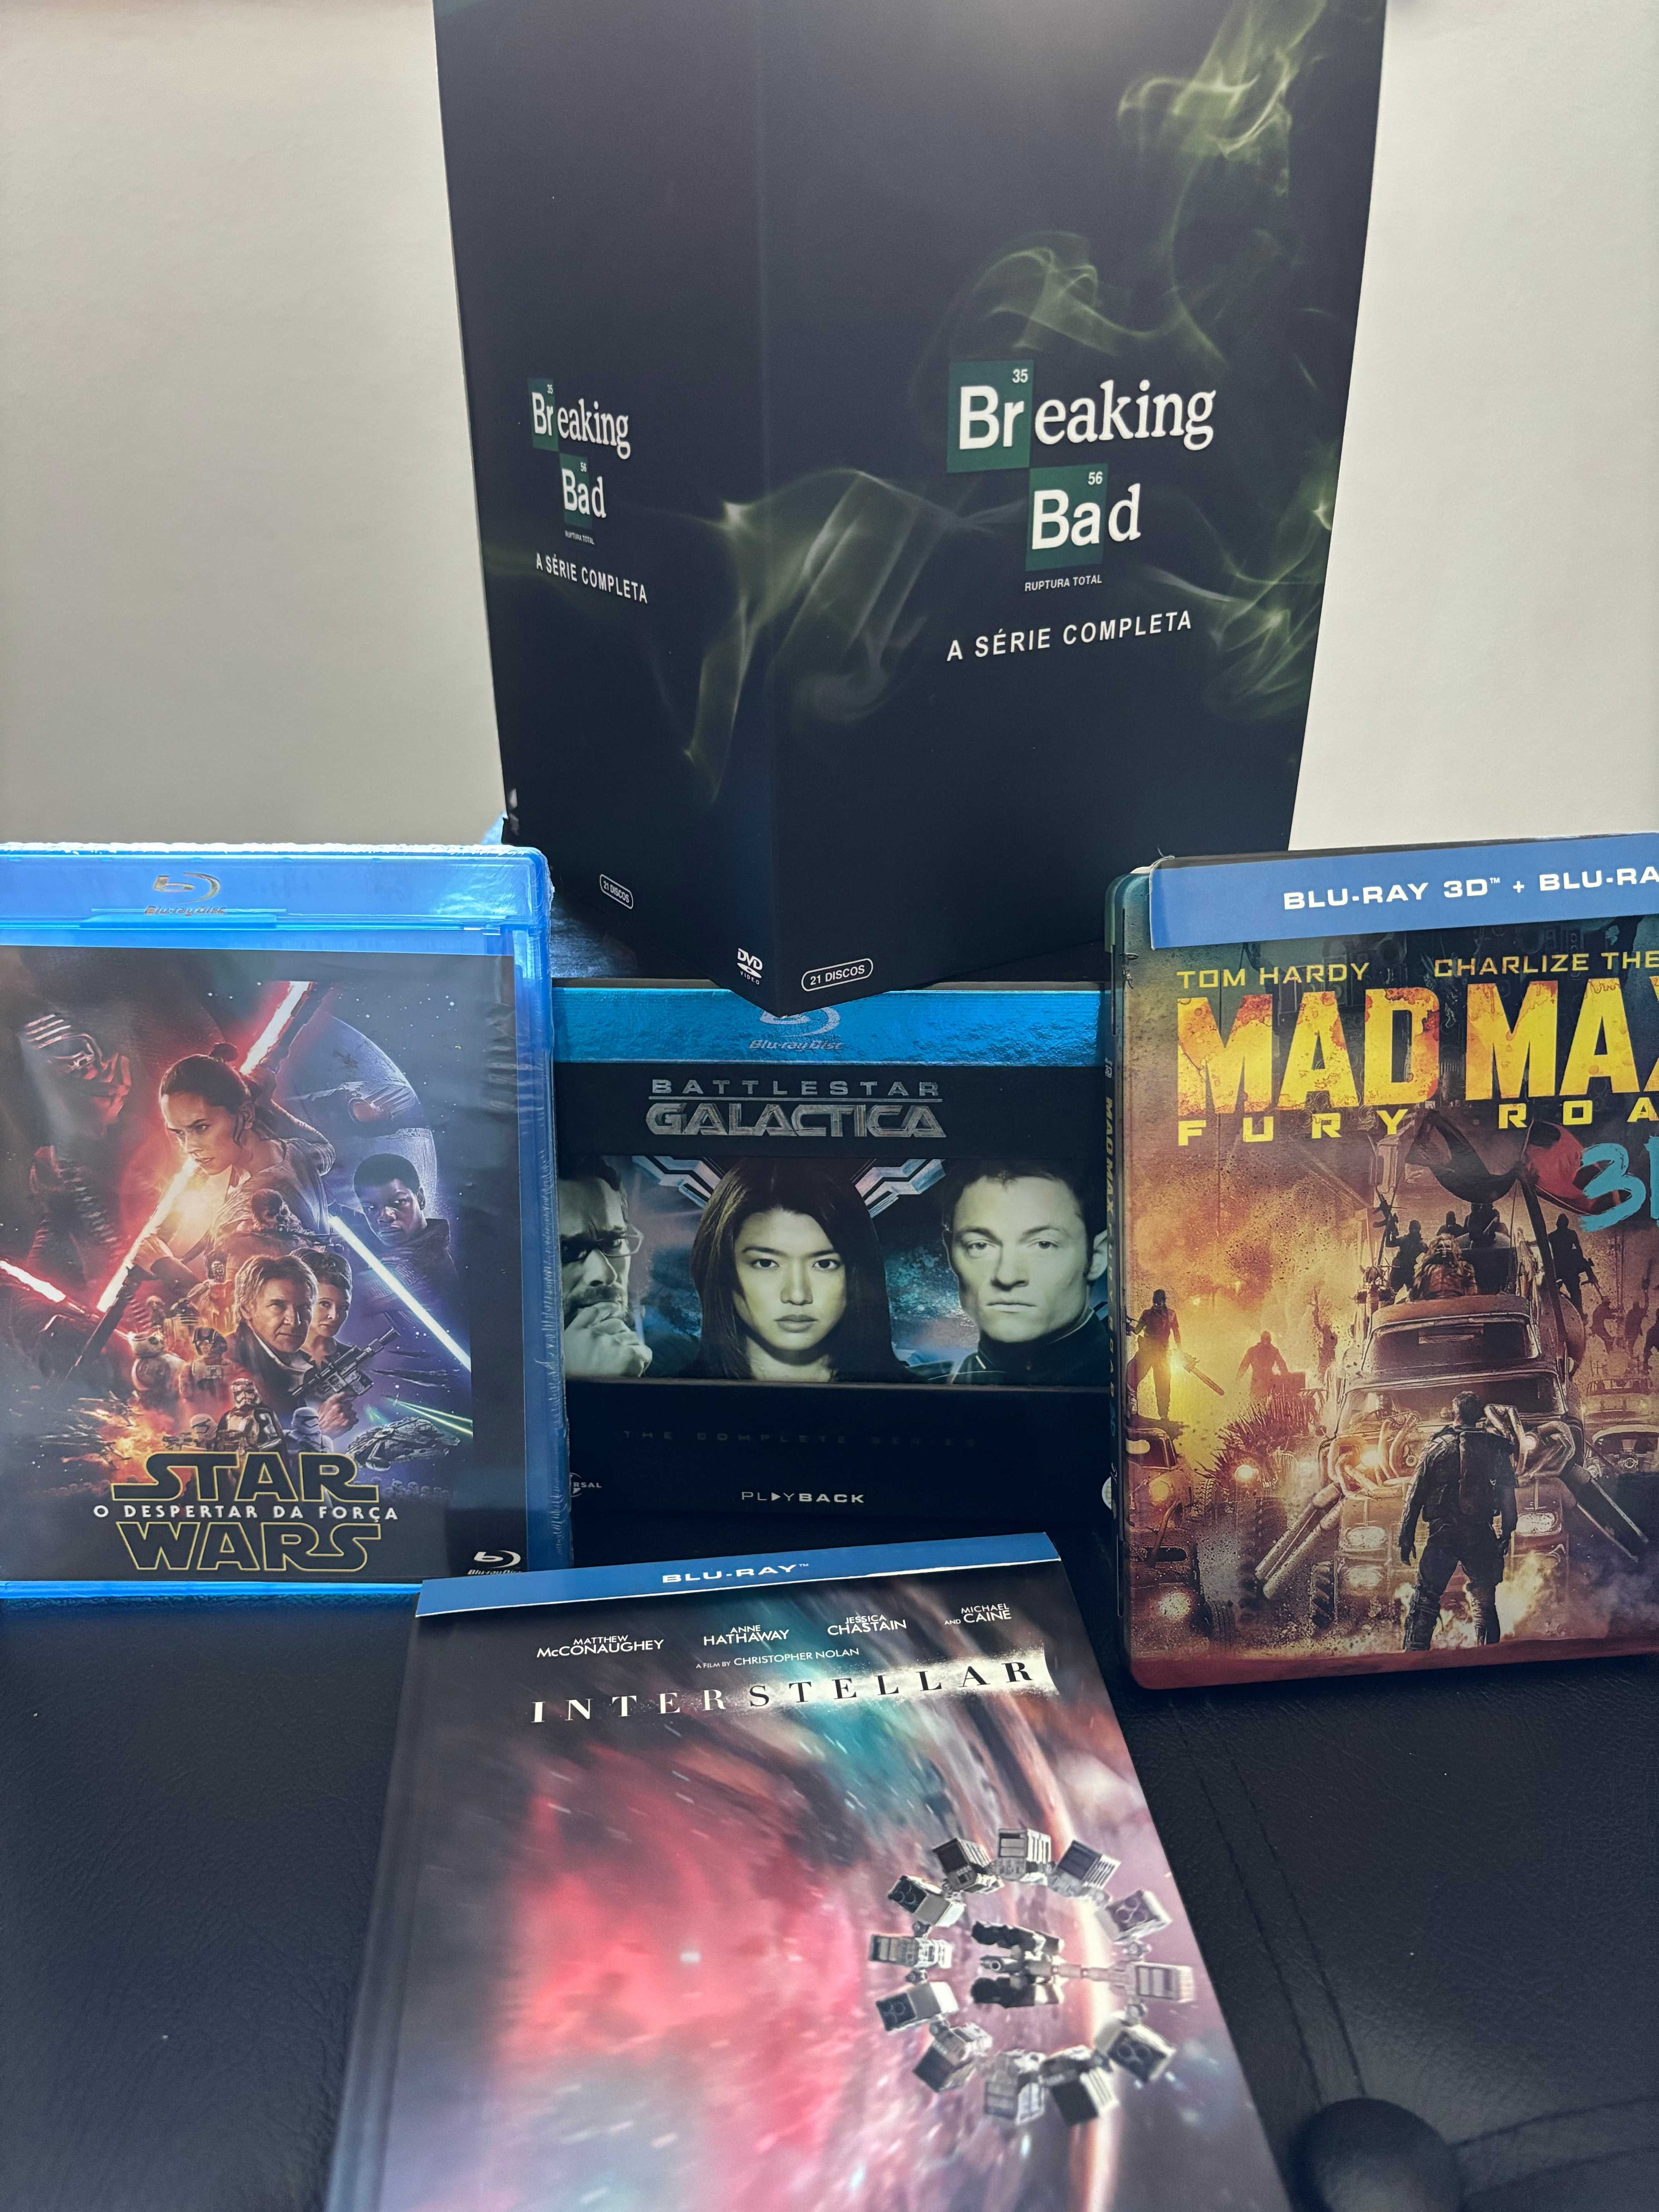 Breaking Bad, Battlestar Galactica, Star Wars, VARIOS Blu-ray